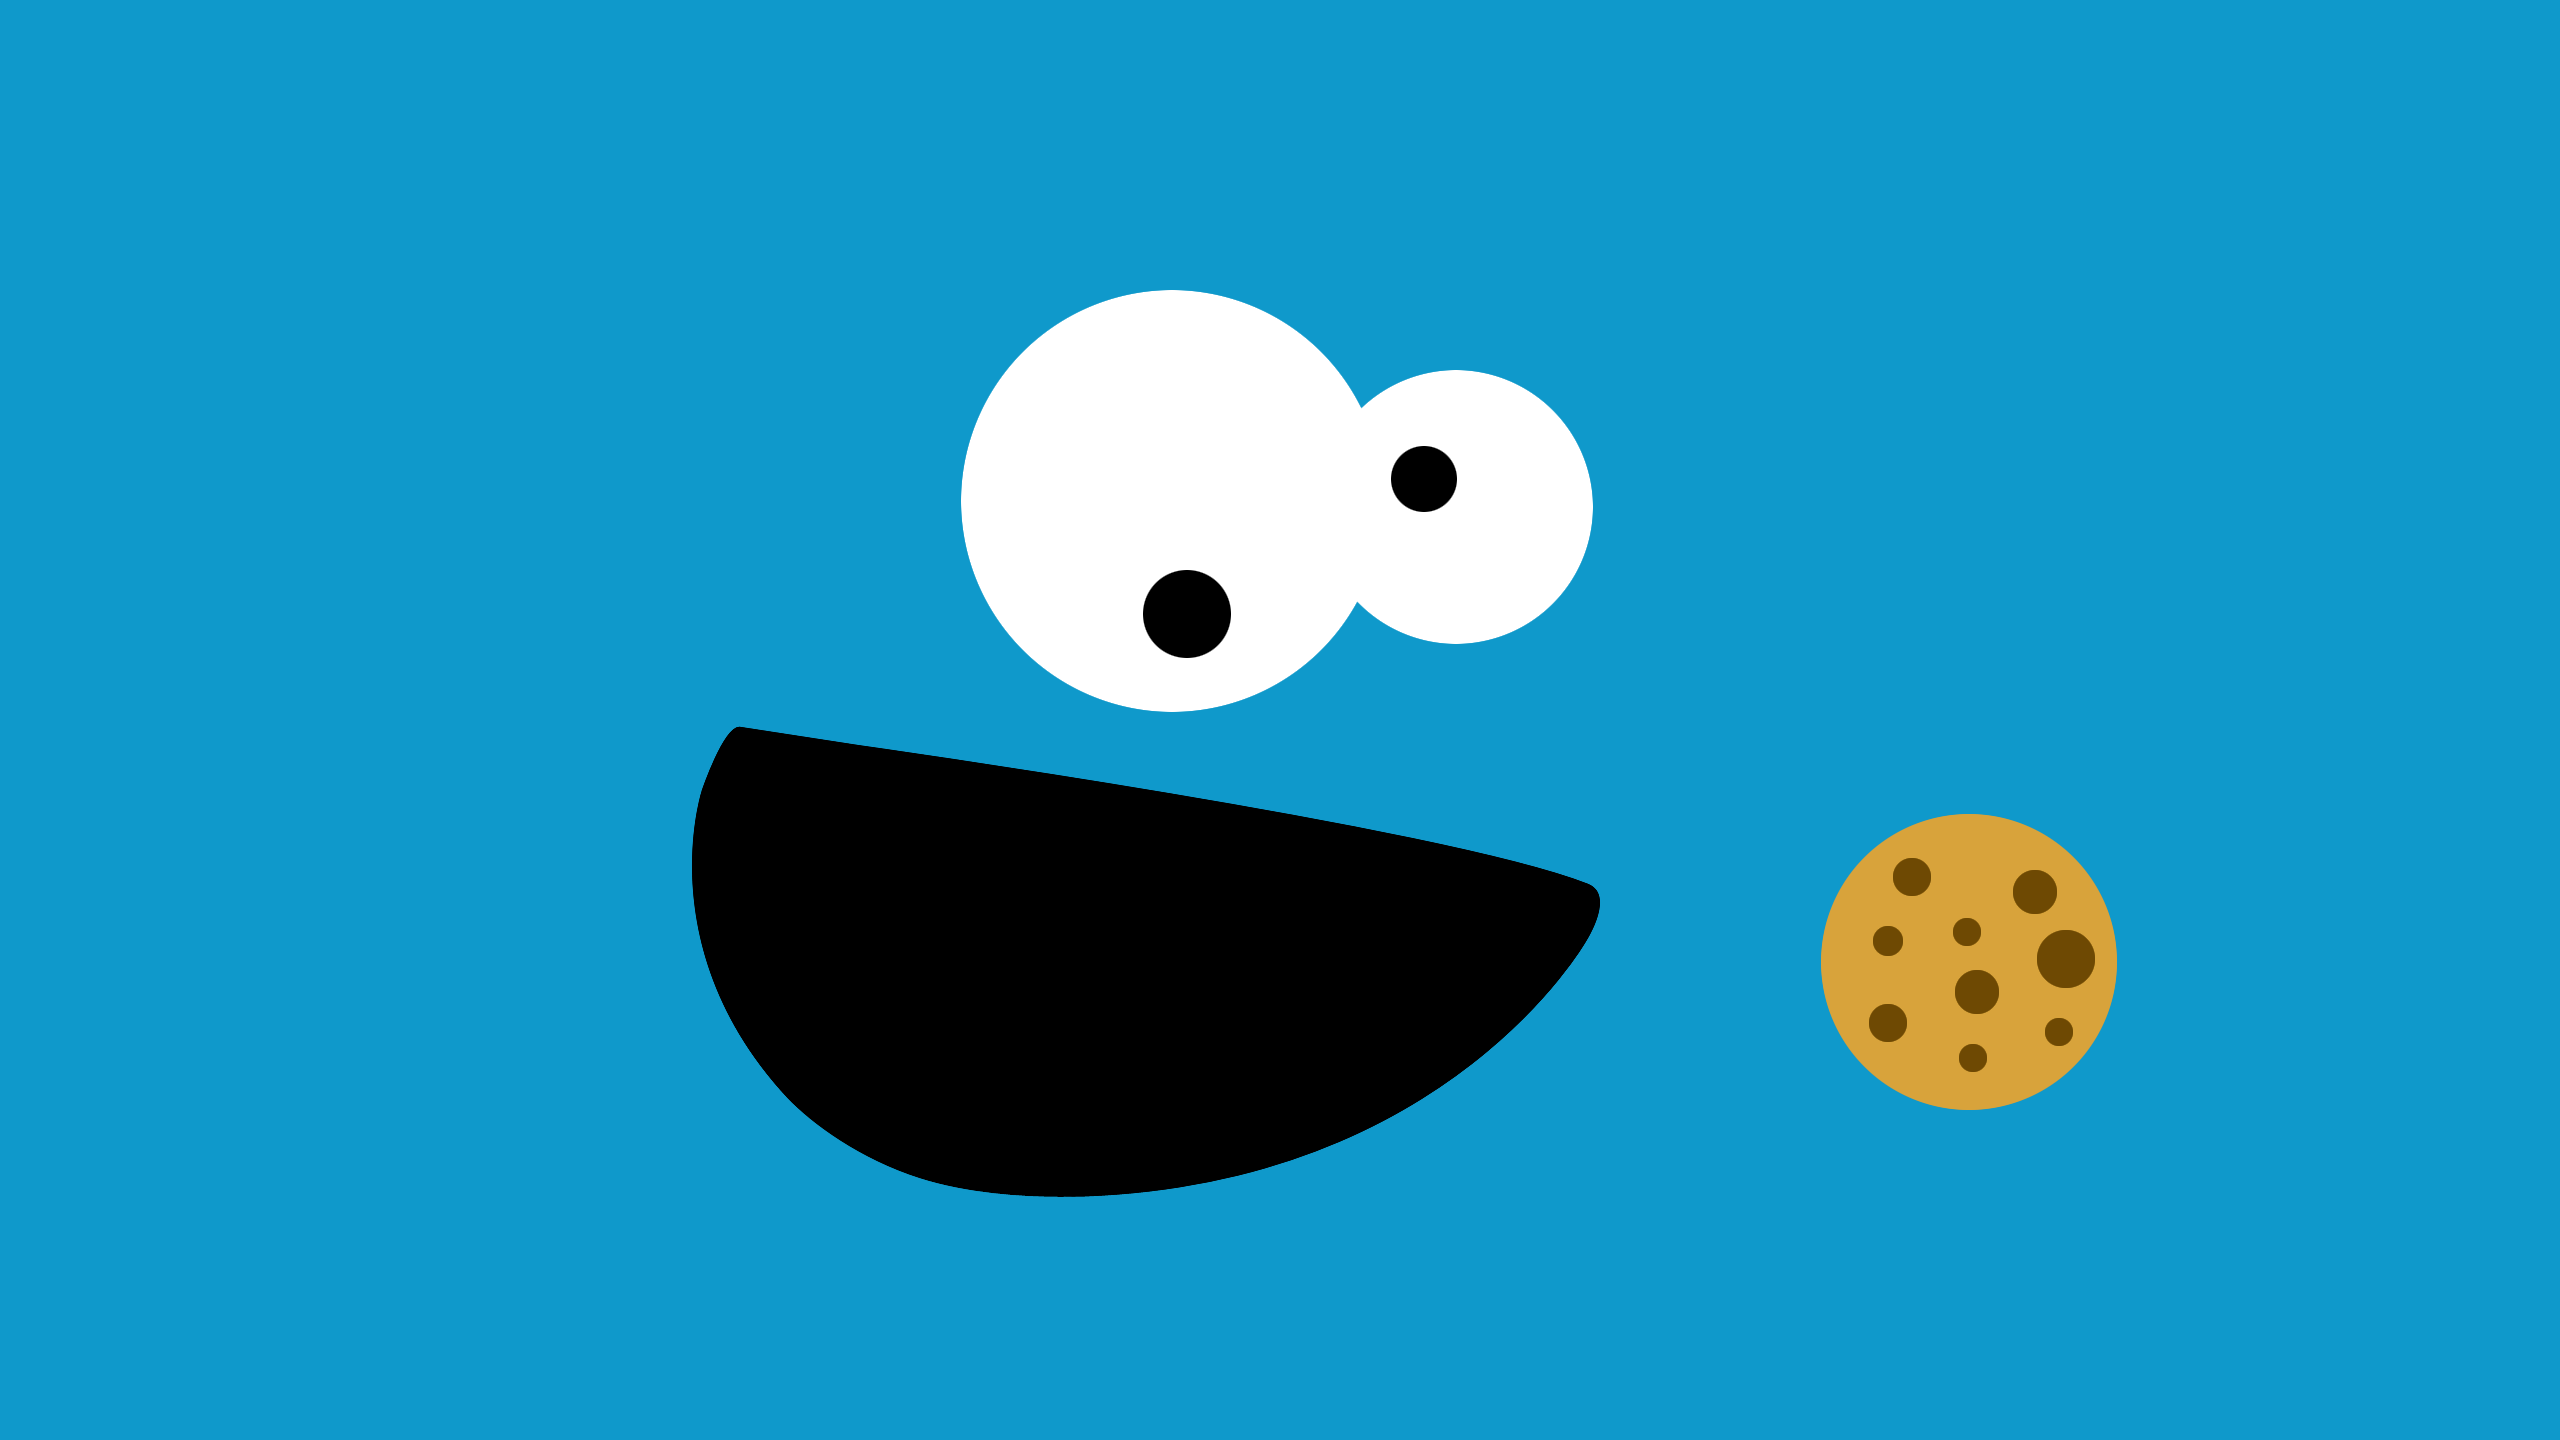 General 2560x1440 Cookie Monster cookies blue blue background minimalism